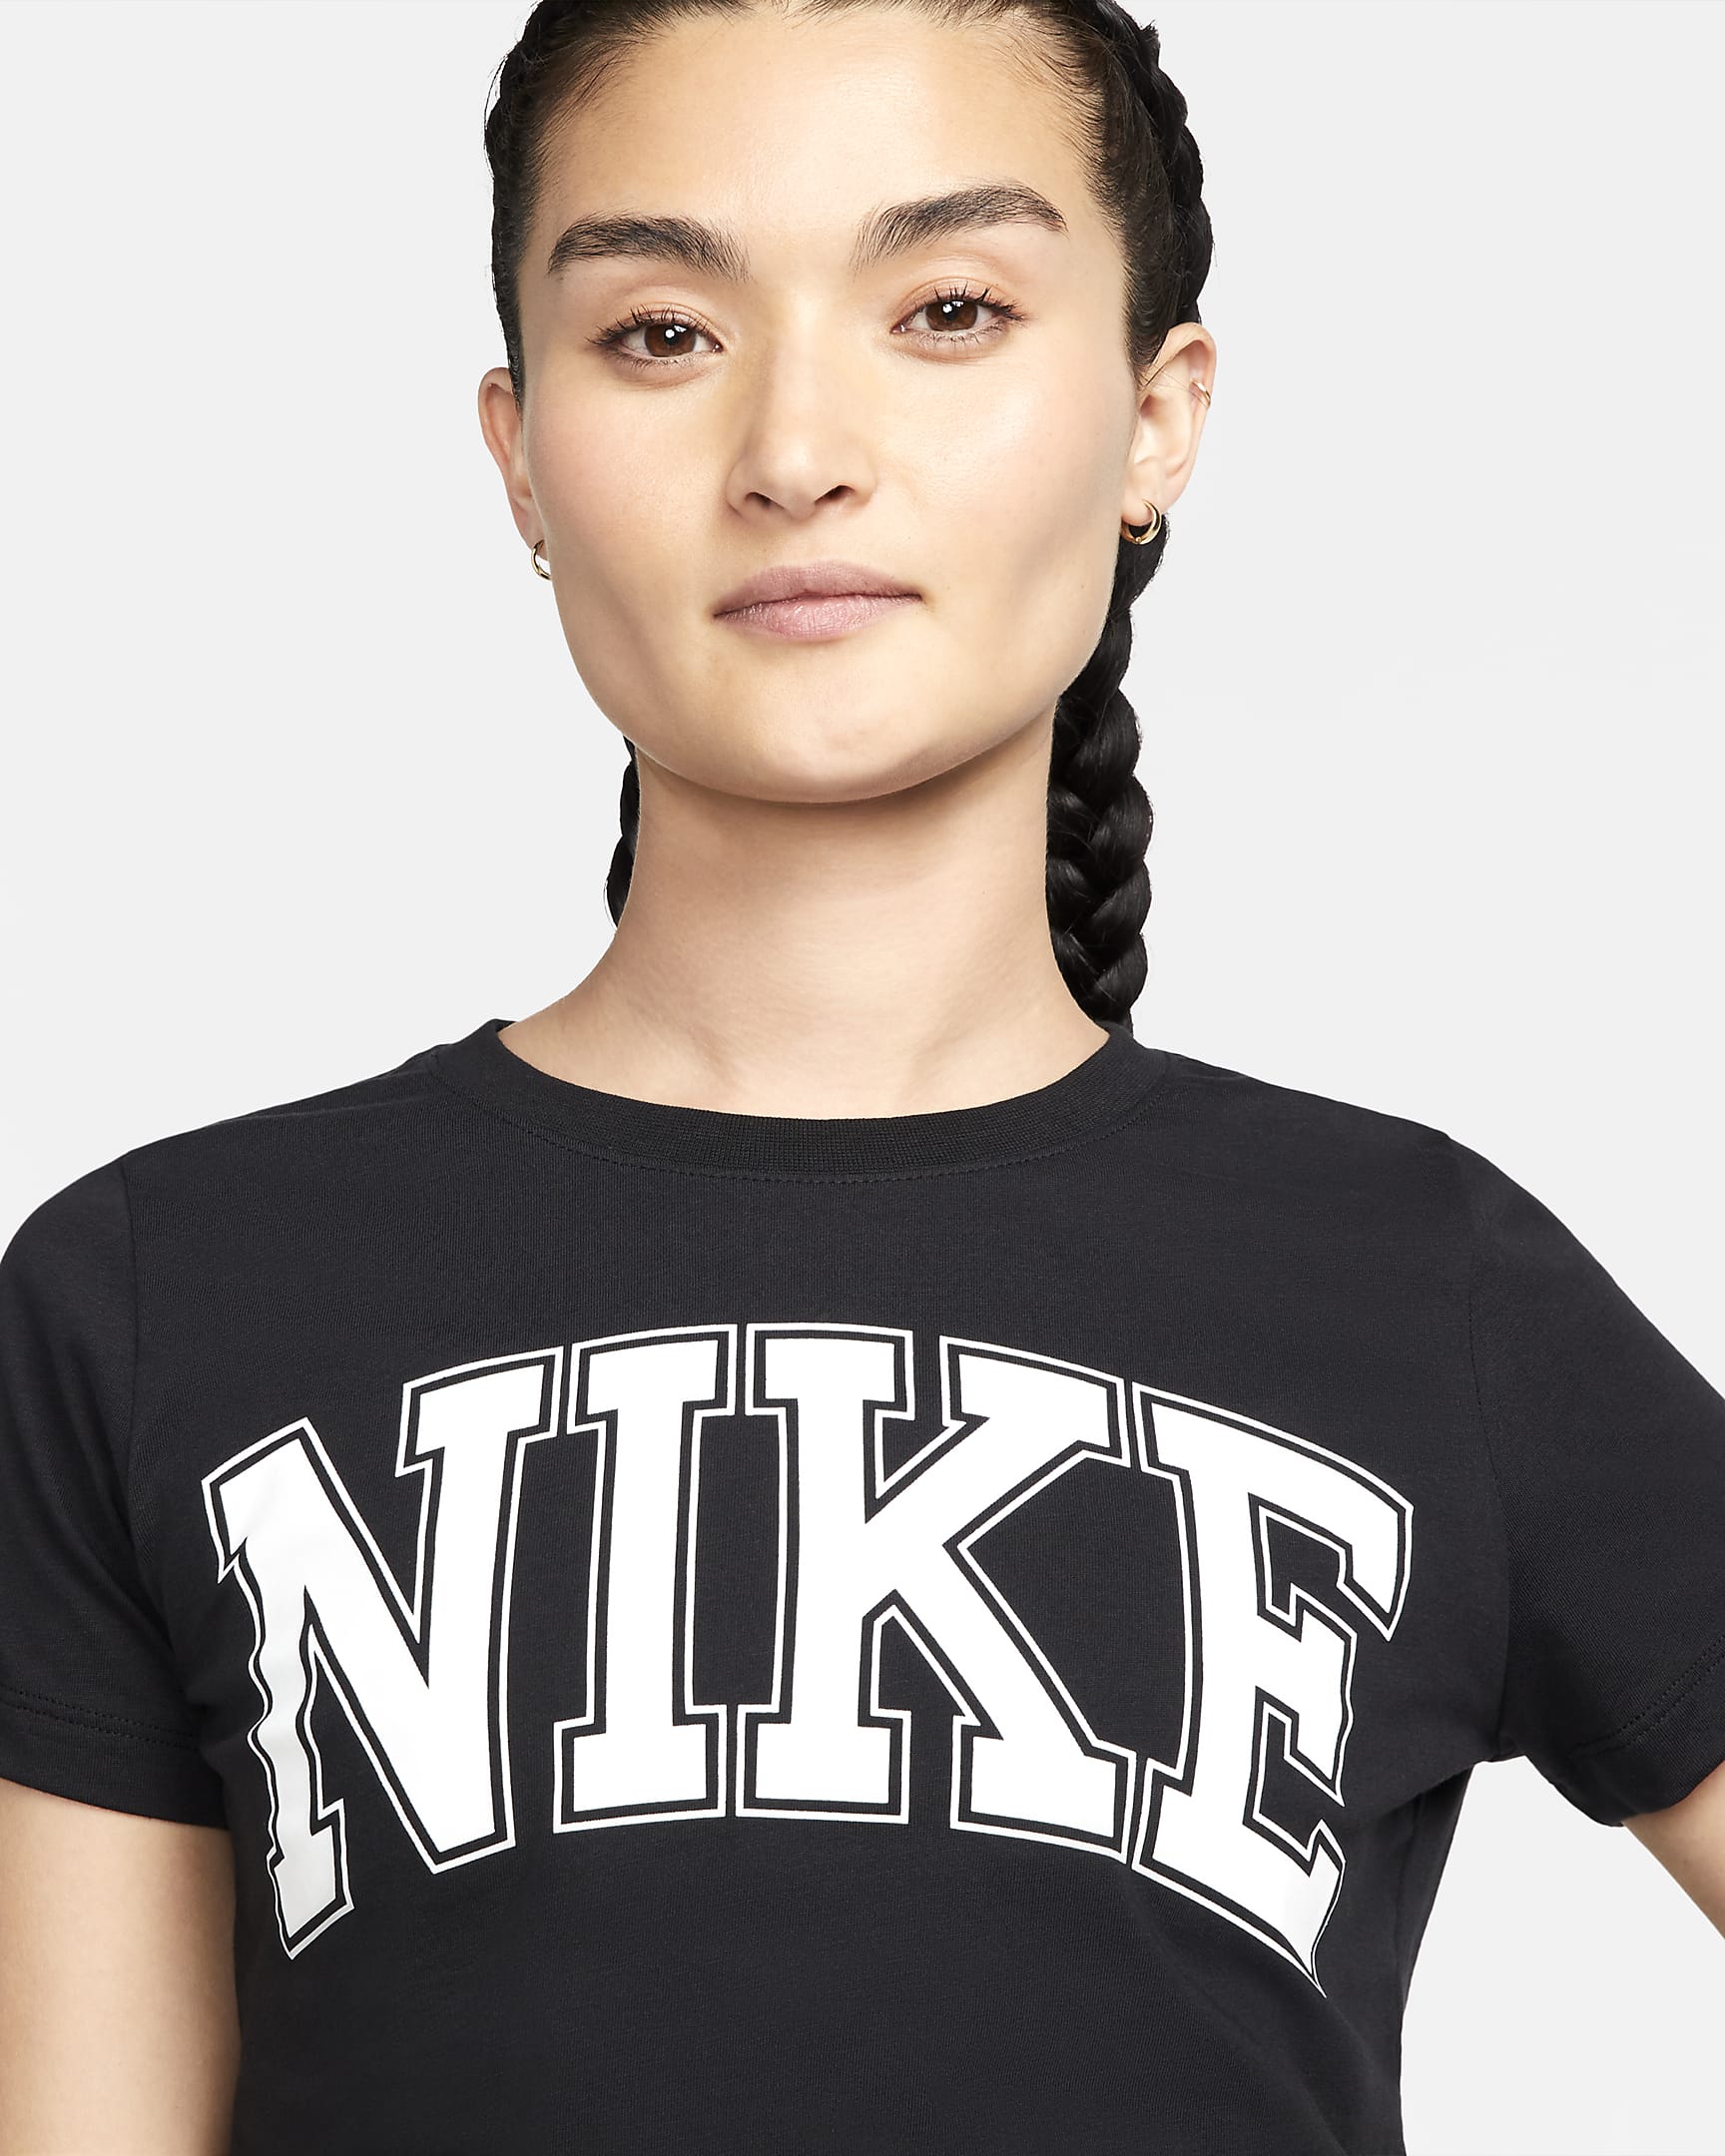 Nike Sportswear Women's T-Shirt. Nike ID